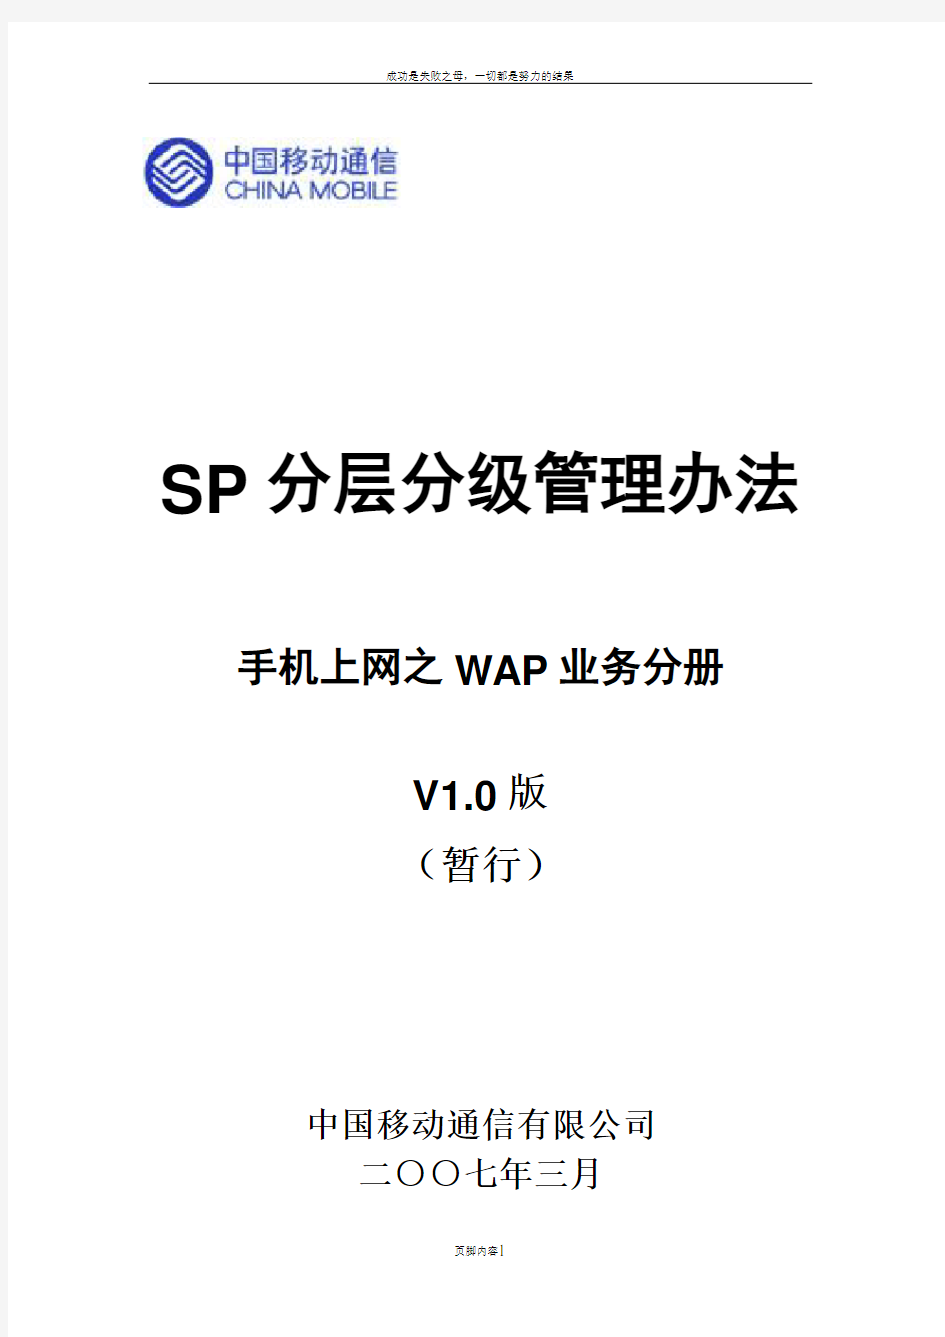 SP分层分级管理办法(WAP)